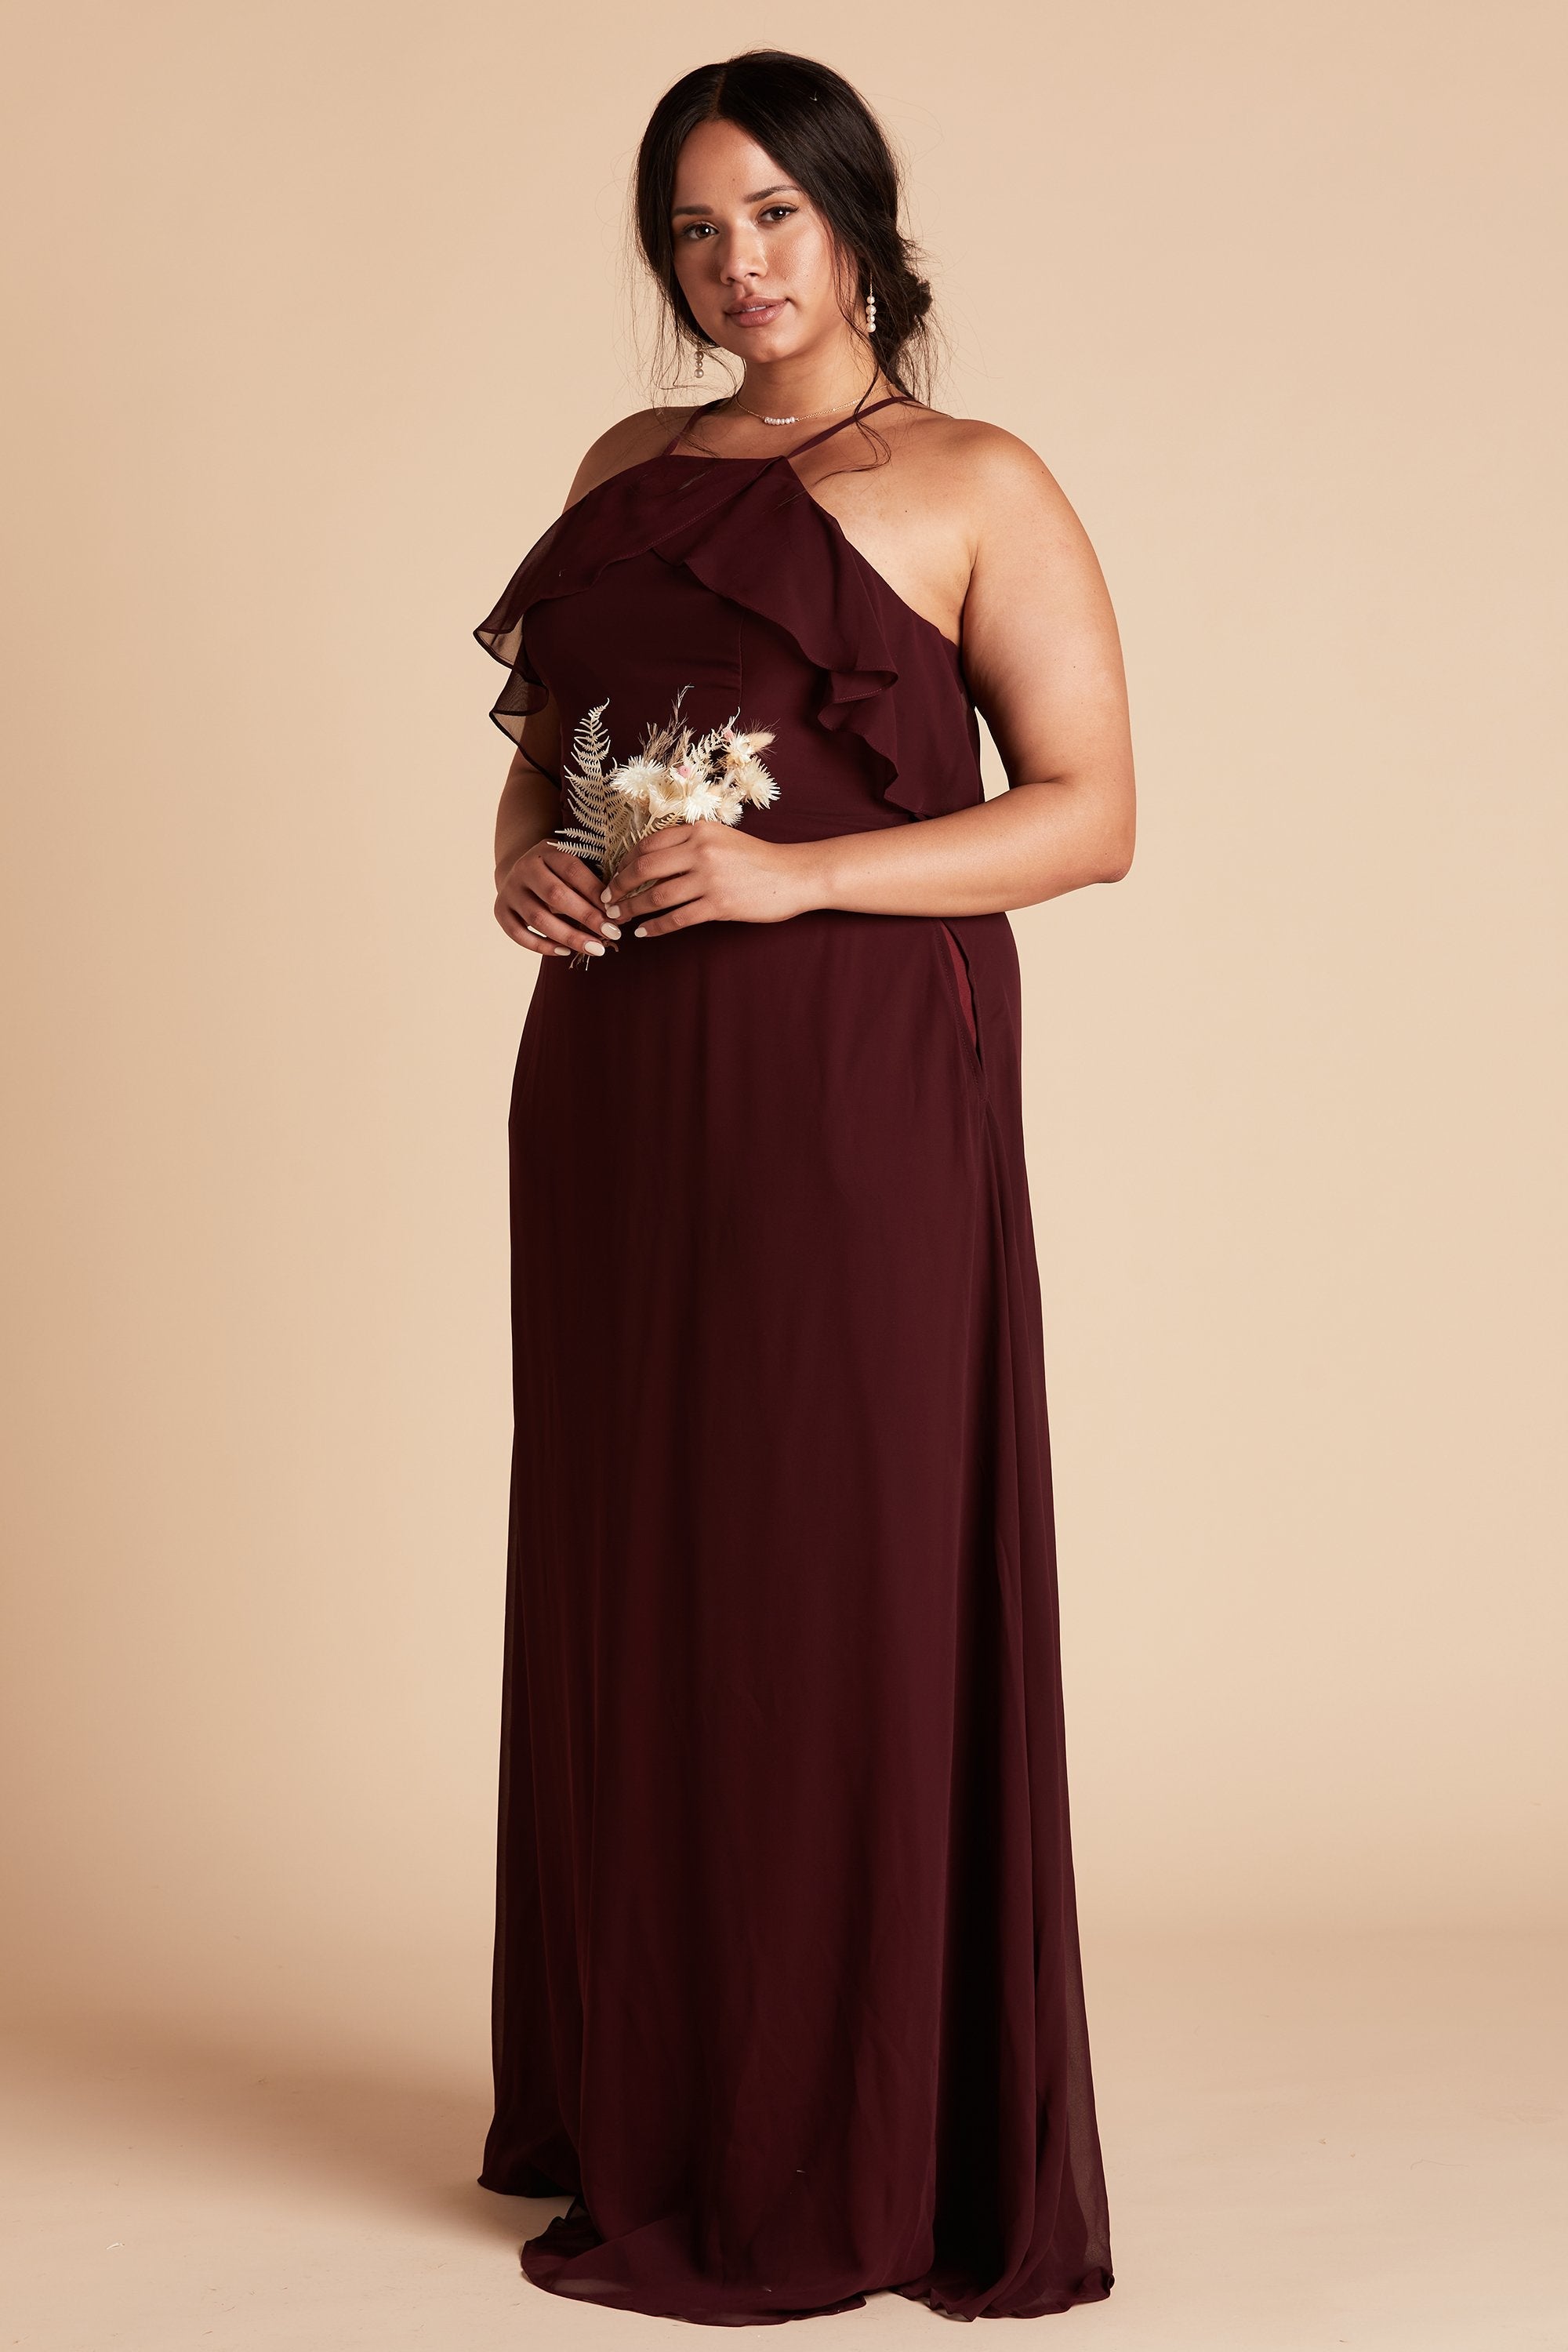 Jules plus size bridesmaid dress in cabernet burgundy chiffon by Birdy Grey, side view